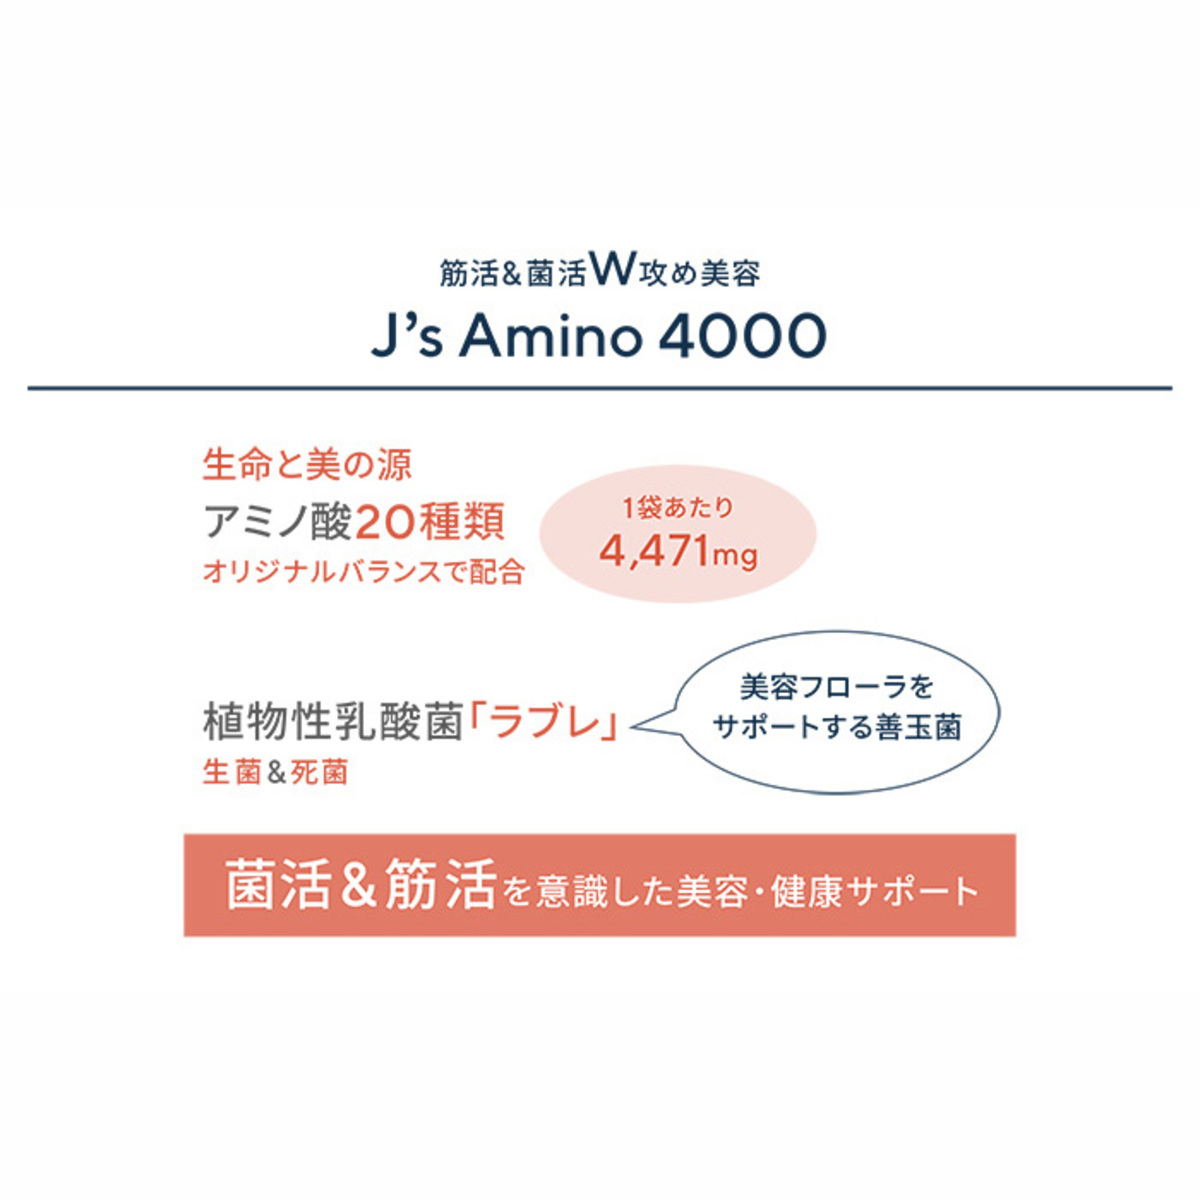 J’s Amino 4000 30包セット - QVC.jp